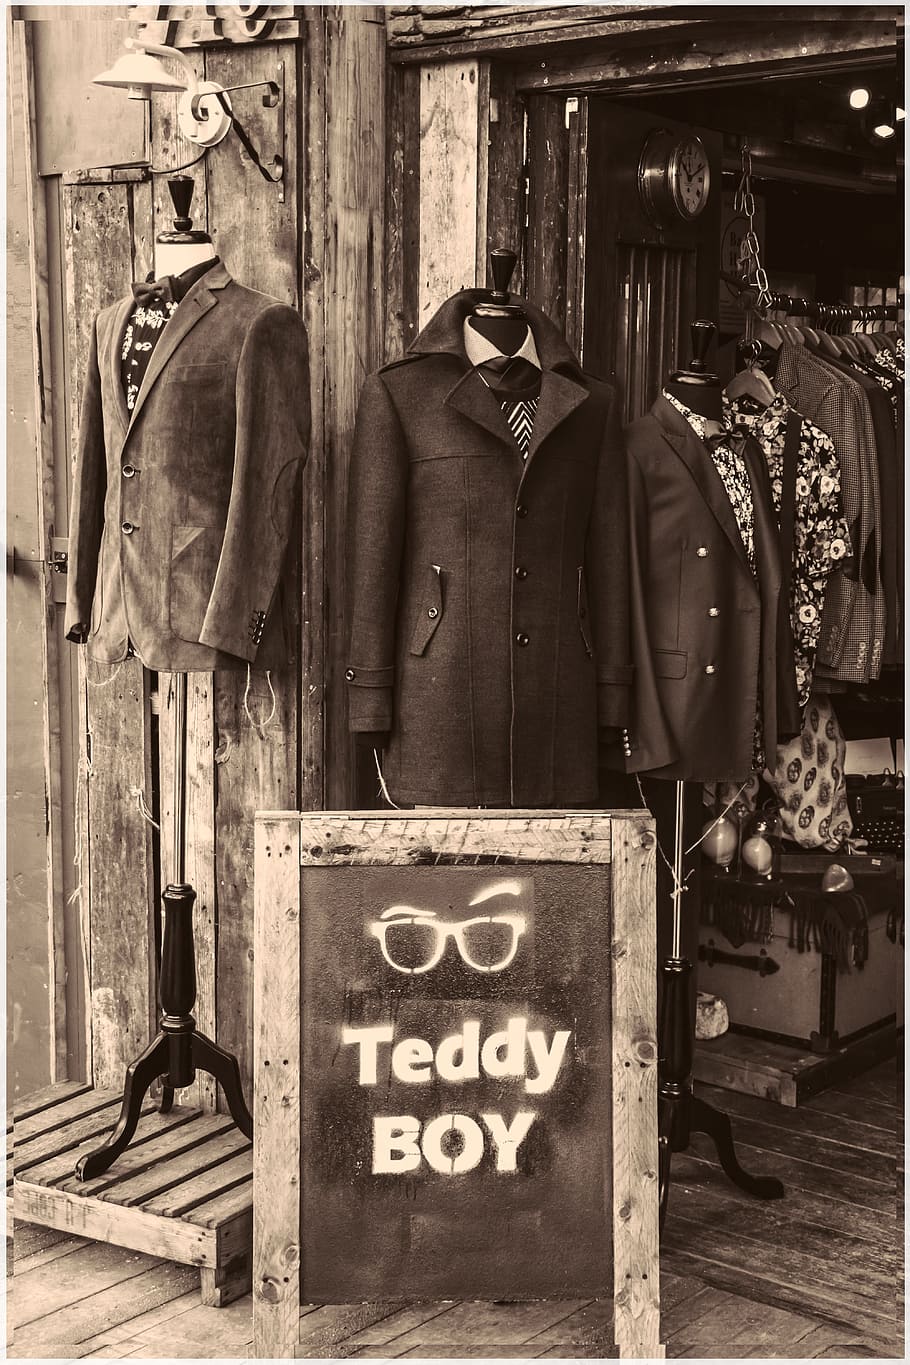 black coat lot, london, teddy boy, camden town, suits, mannequins, male, business, black, shirt